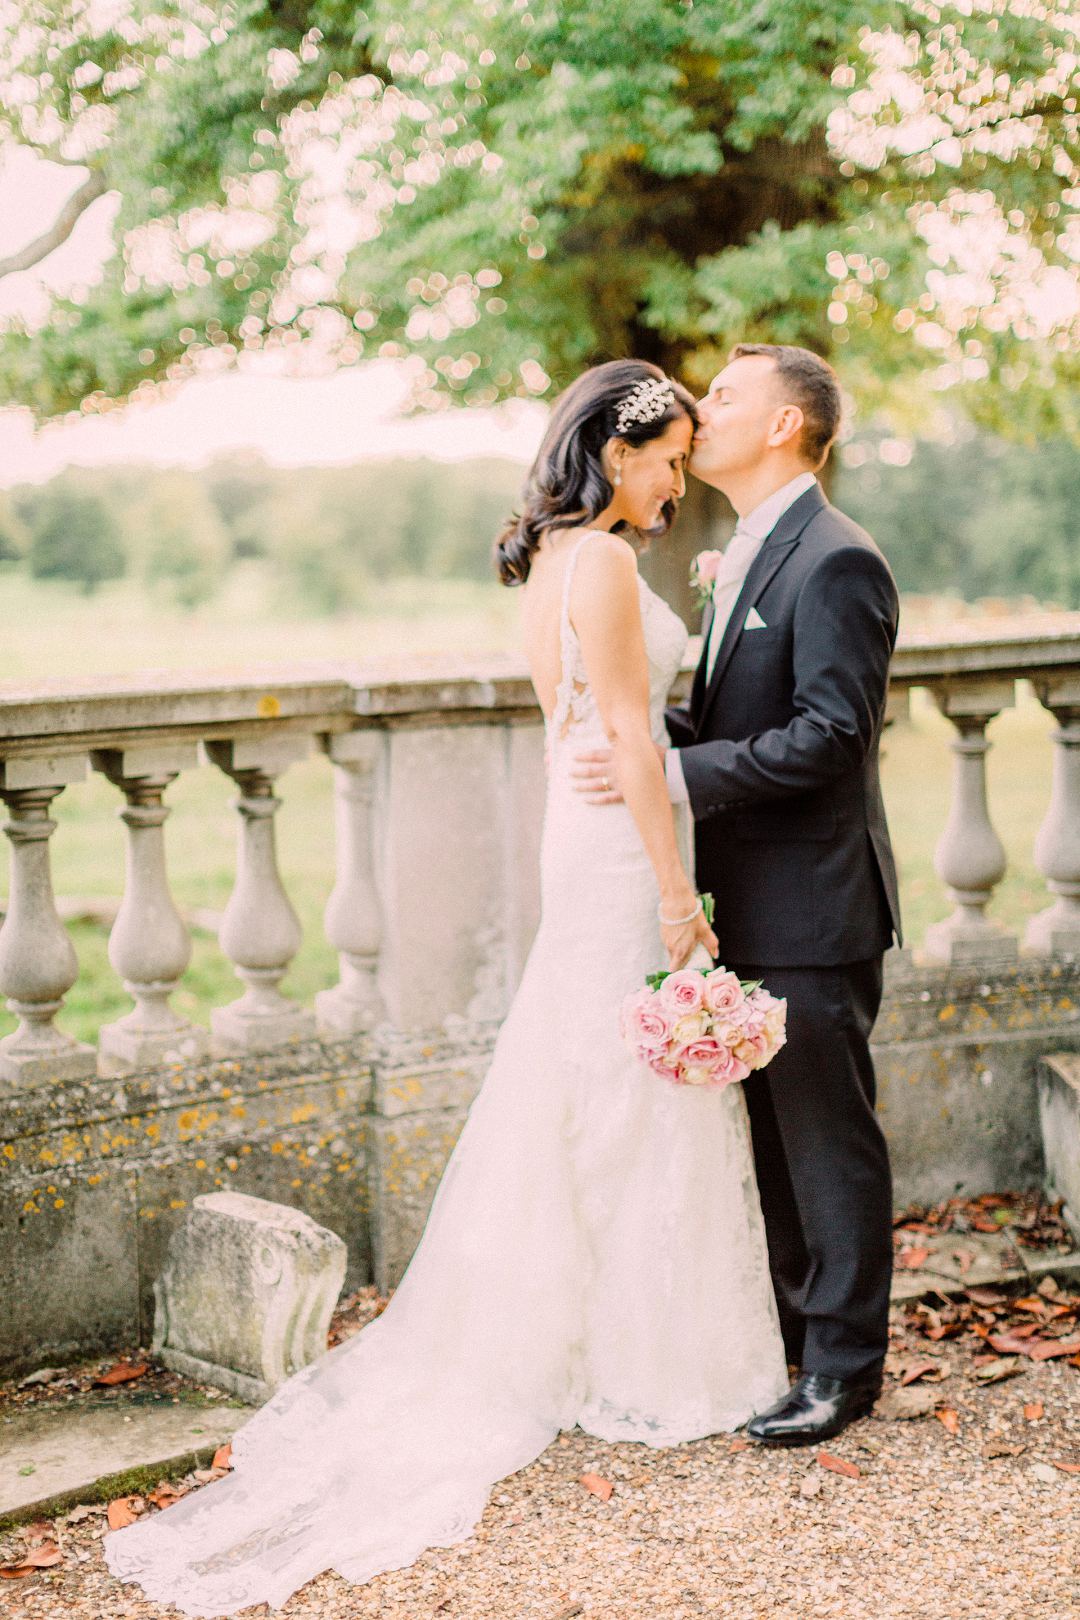 LUXURY WEDDING PHOTOGRAPHER LONDON UK – Sanshine Photography » Wedding ...